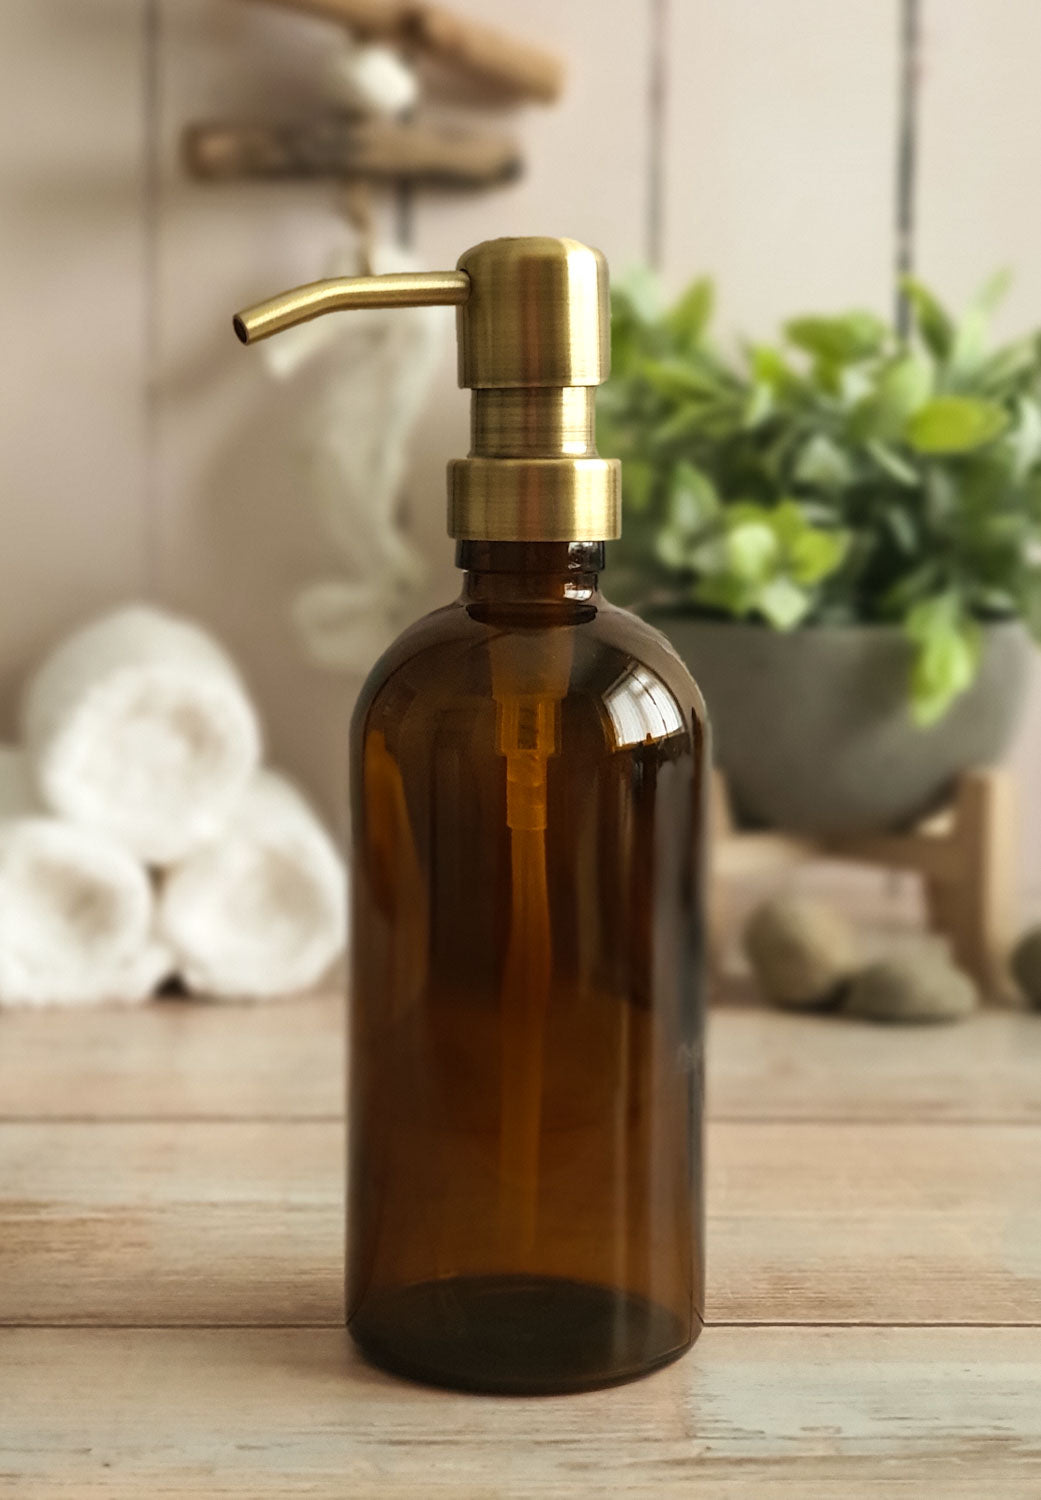 300ml Amber Glass Soap Dispenser Bottles with Brass Style Metal Pump